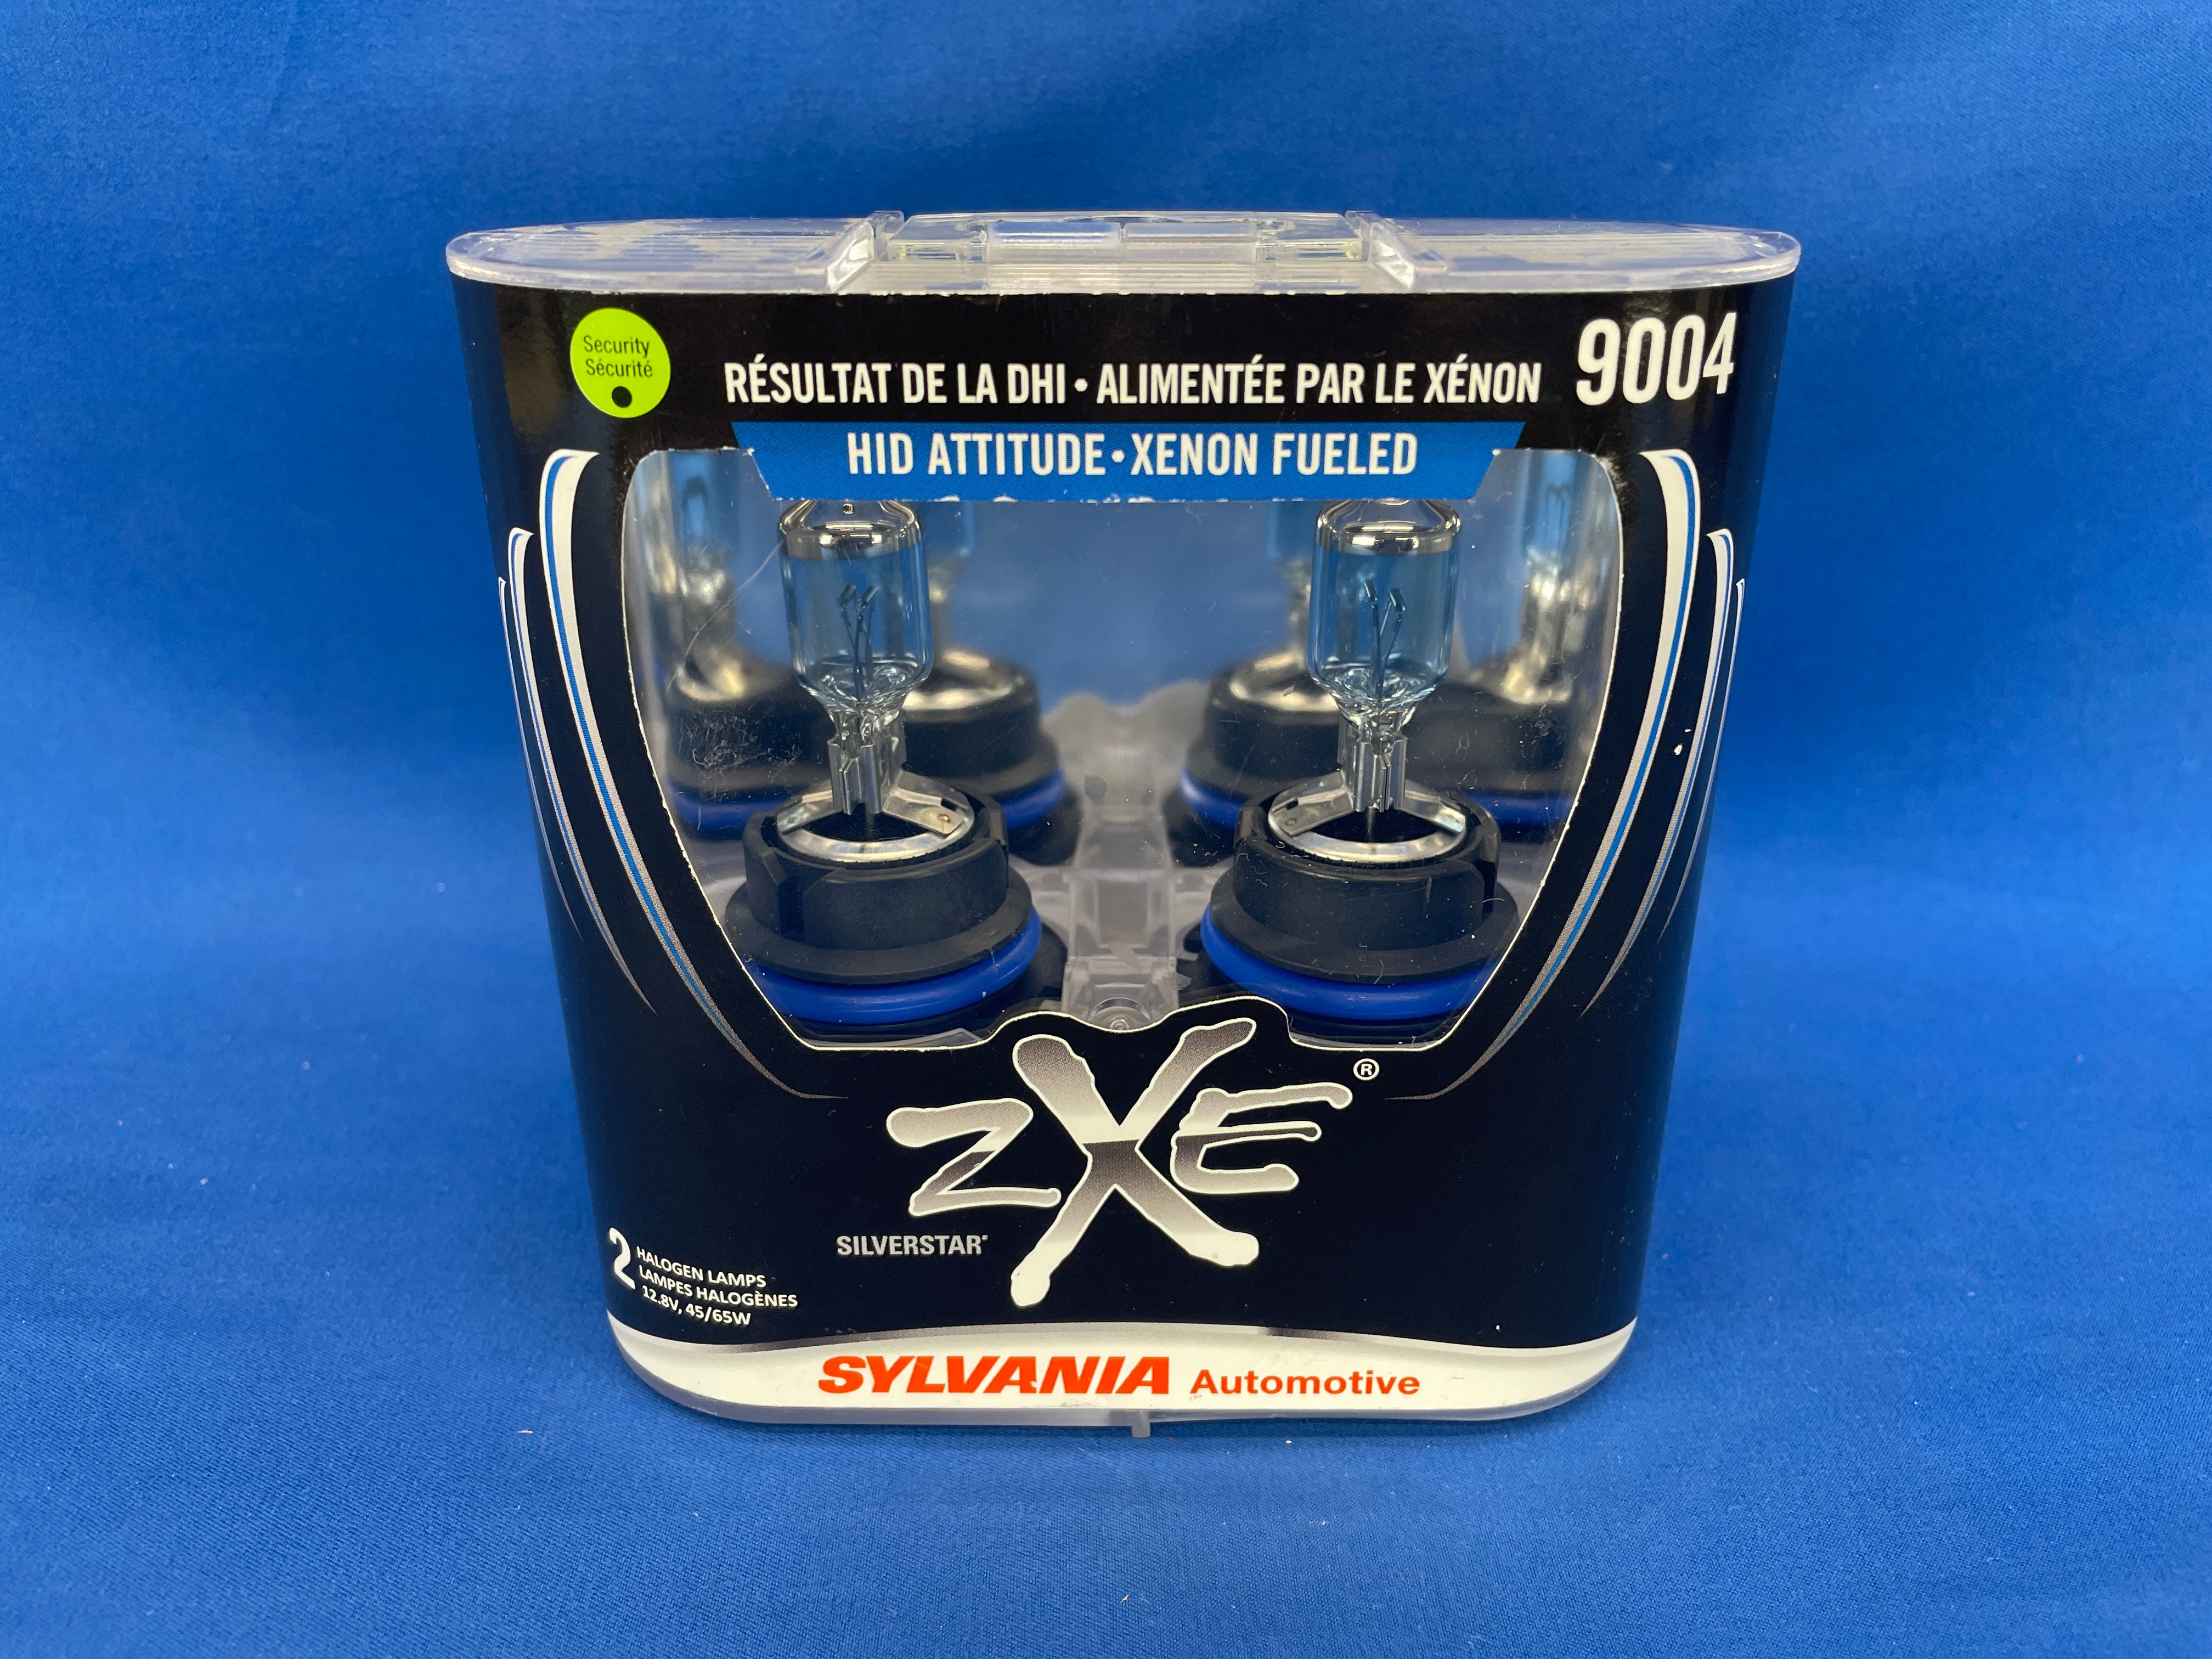 SYLVANIA 9004 SilverStar zXe High Performance Halogen Headlight Bulb - 2-PK